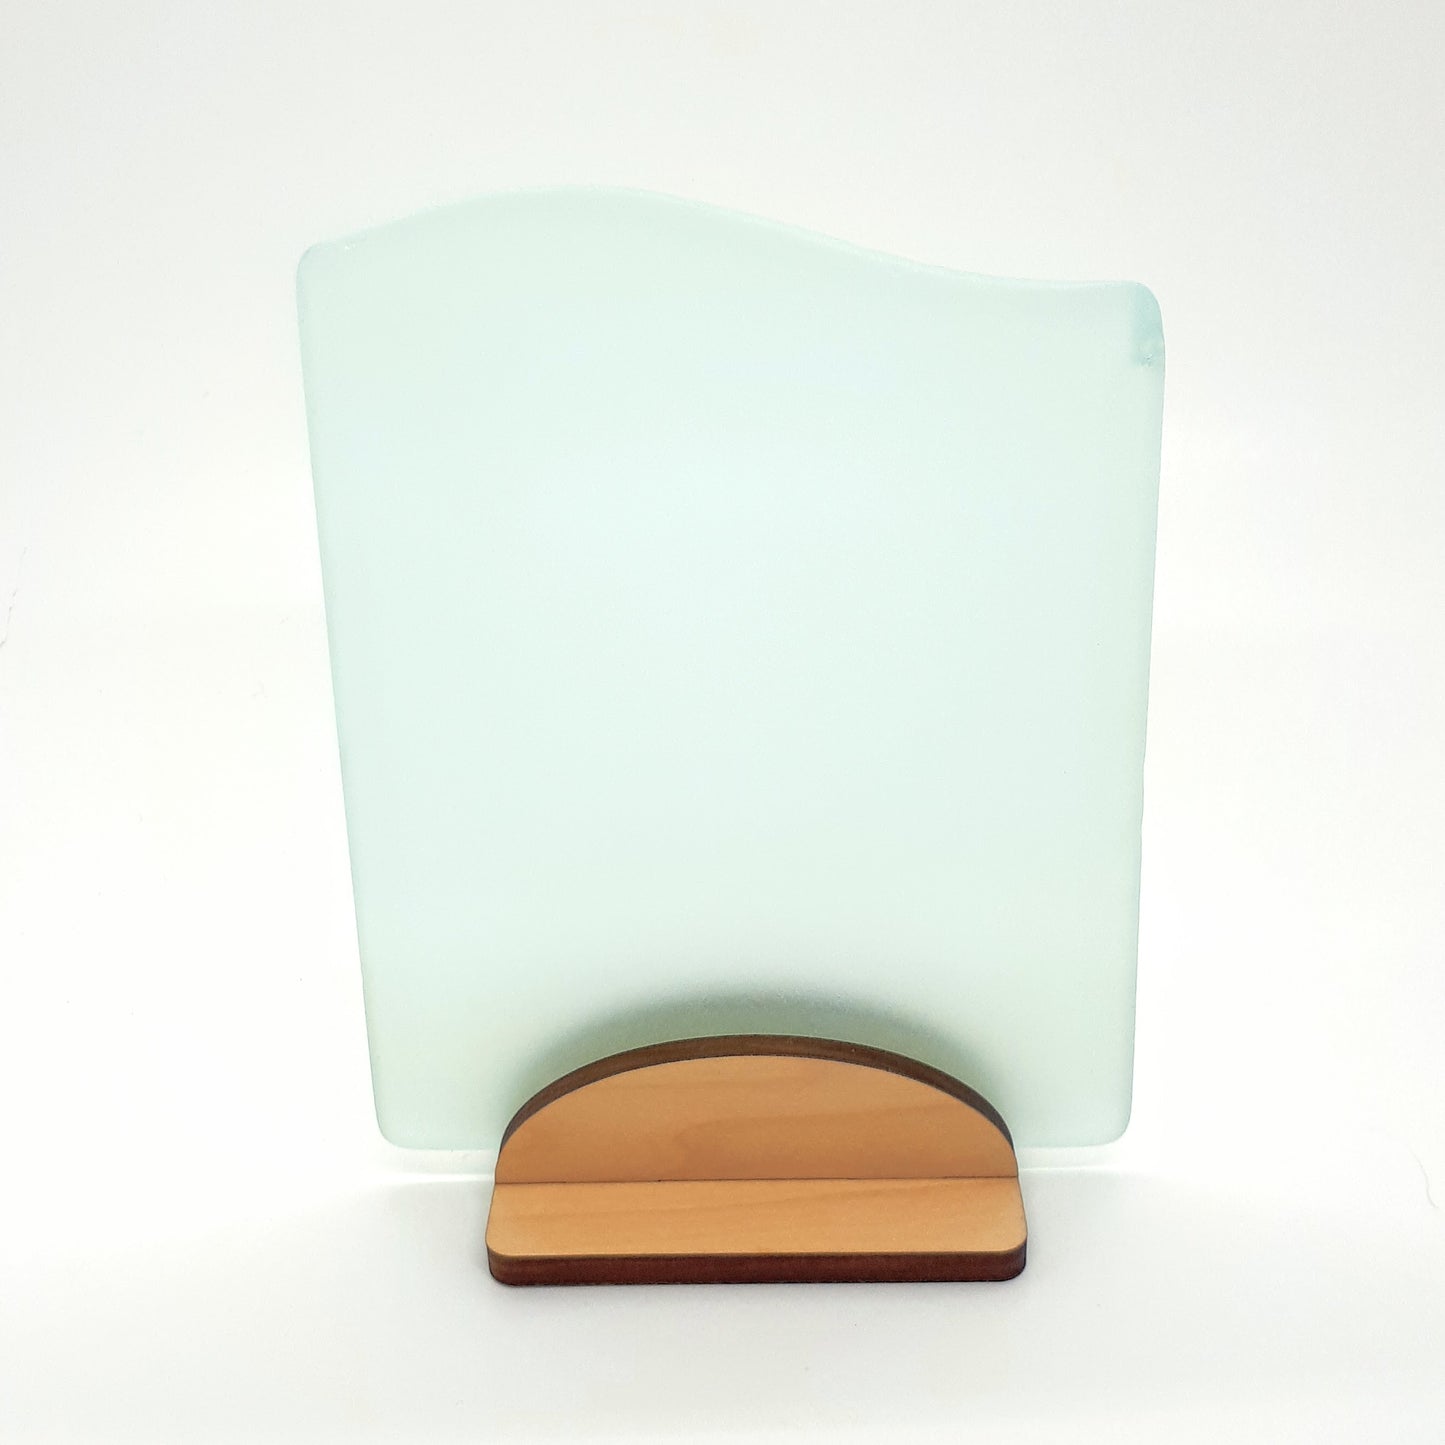 Light sea green sea glass sign blank - 5x4 inch tumble glass piece